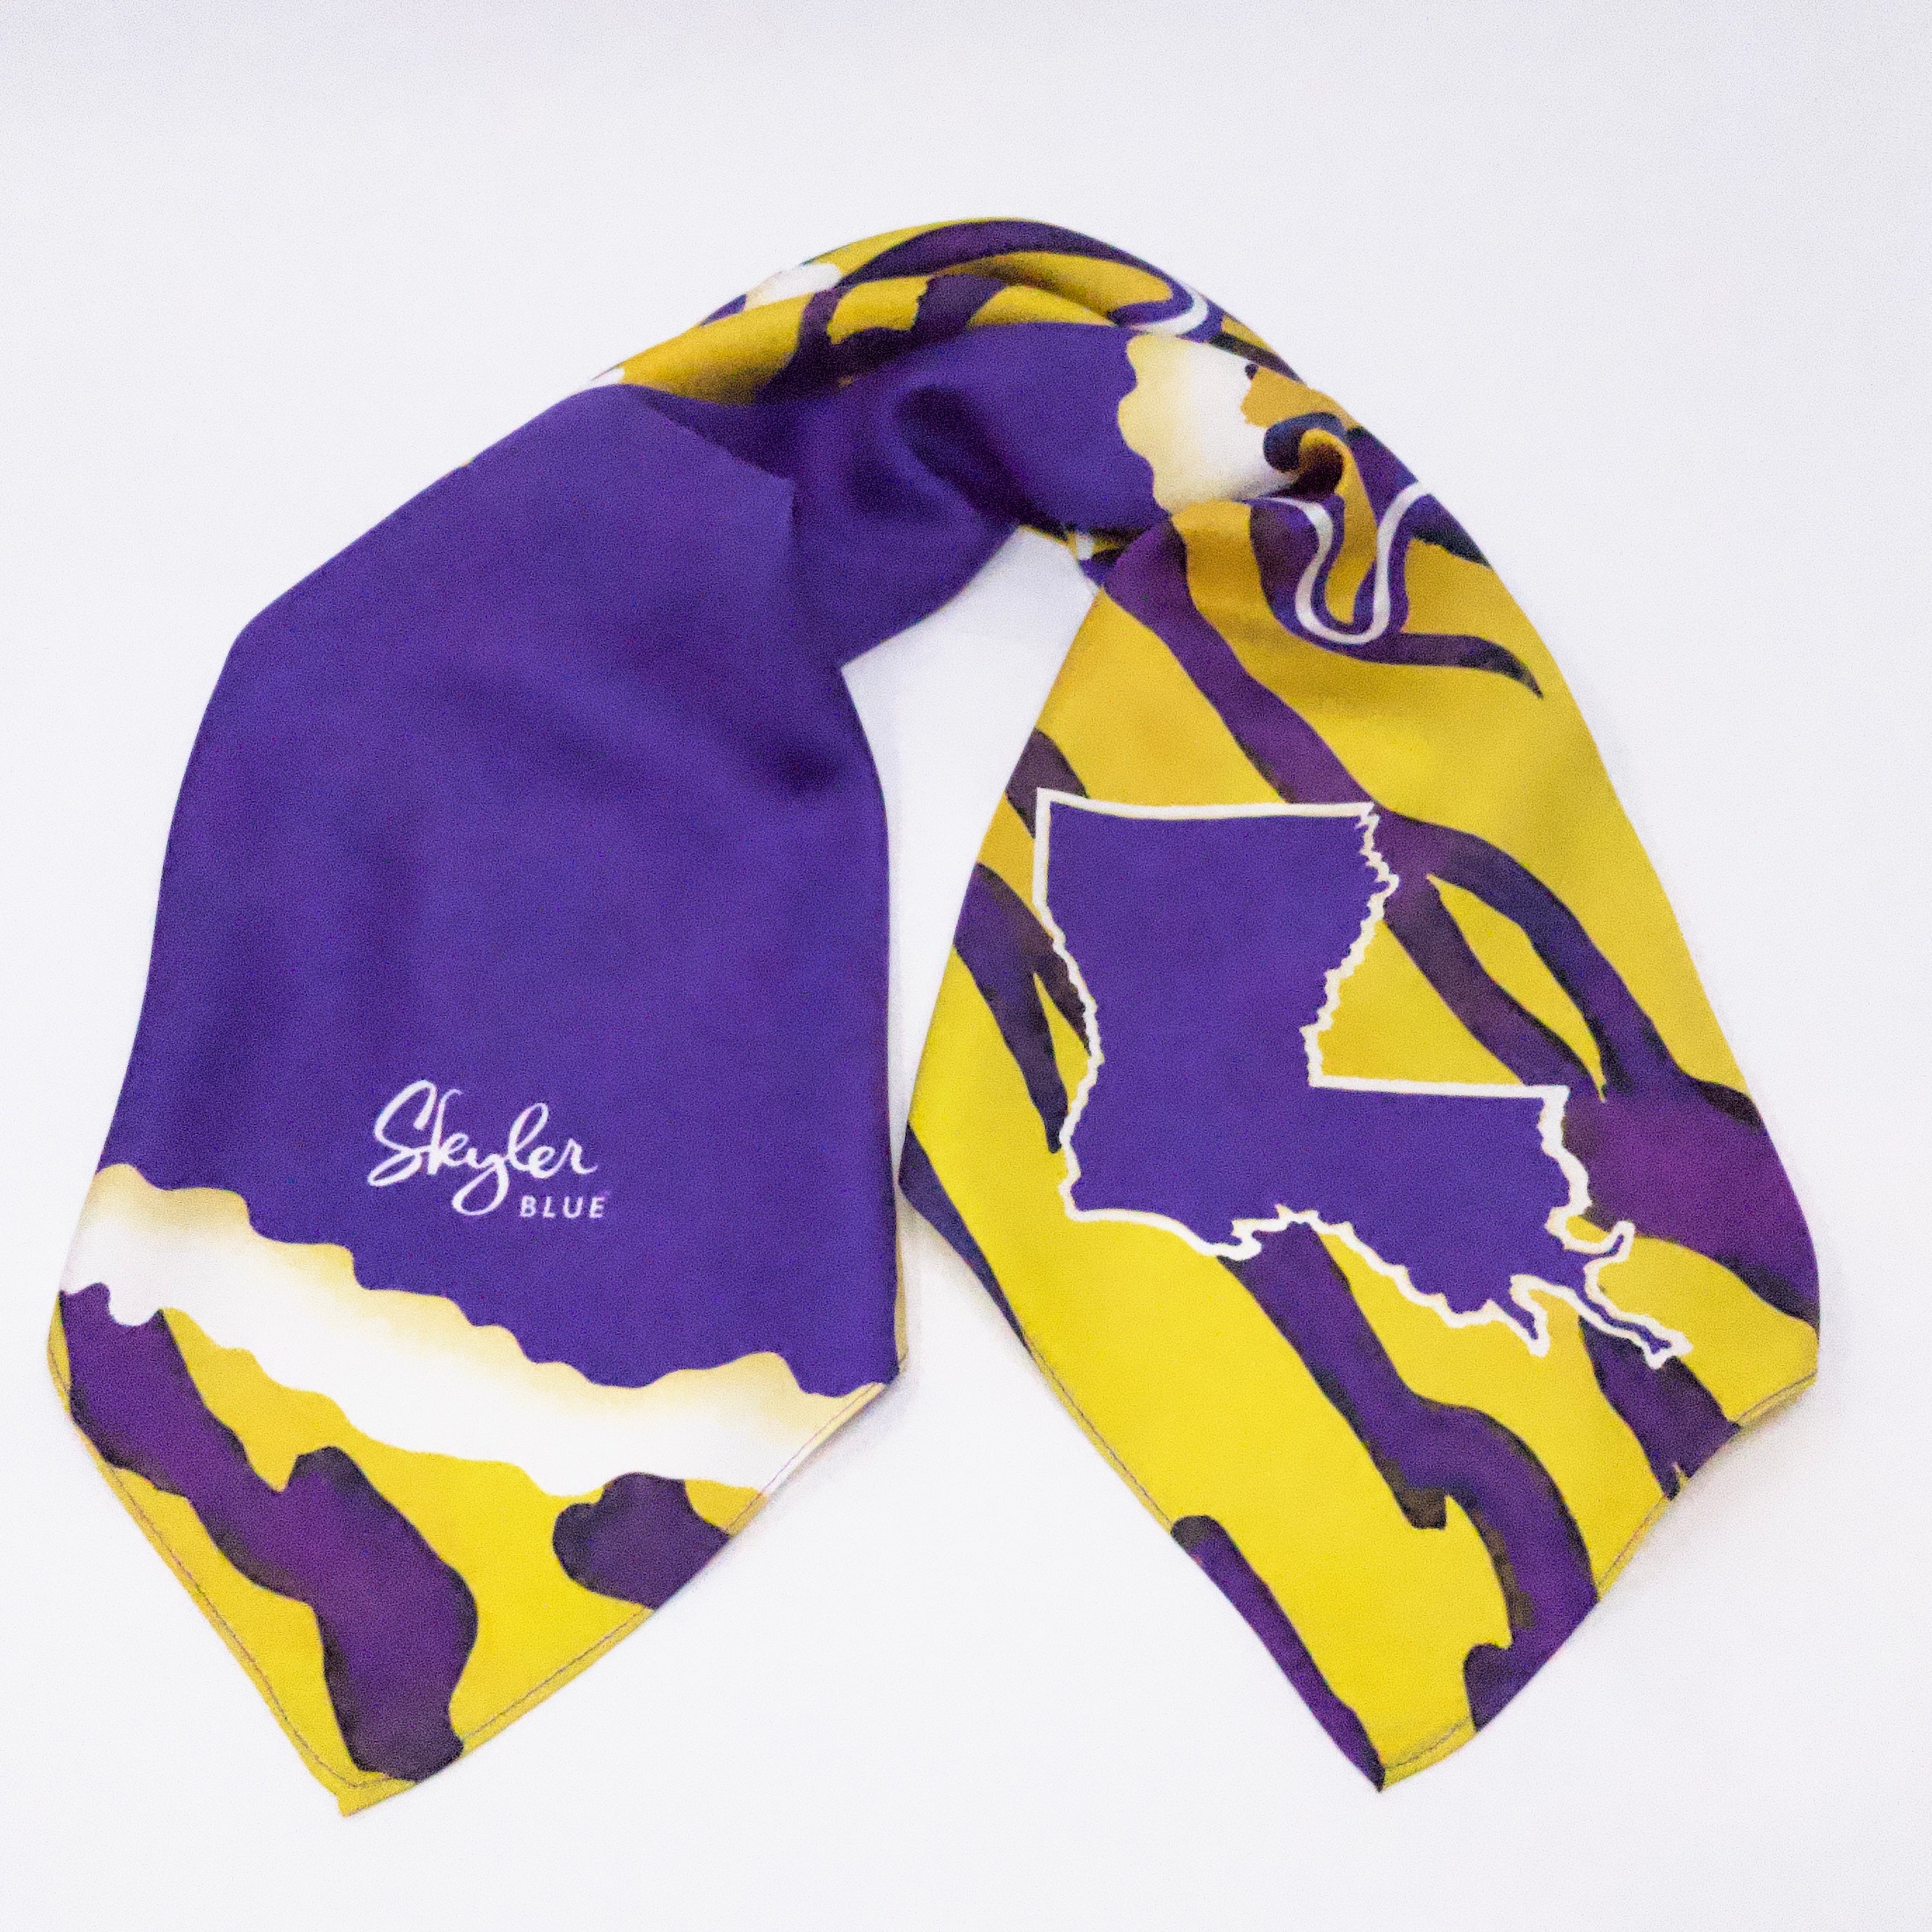 Skyler Blue’s The Baton Rouge 60-centimeter 100% silk twill scarf